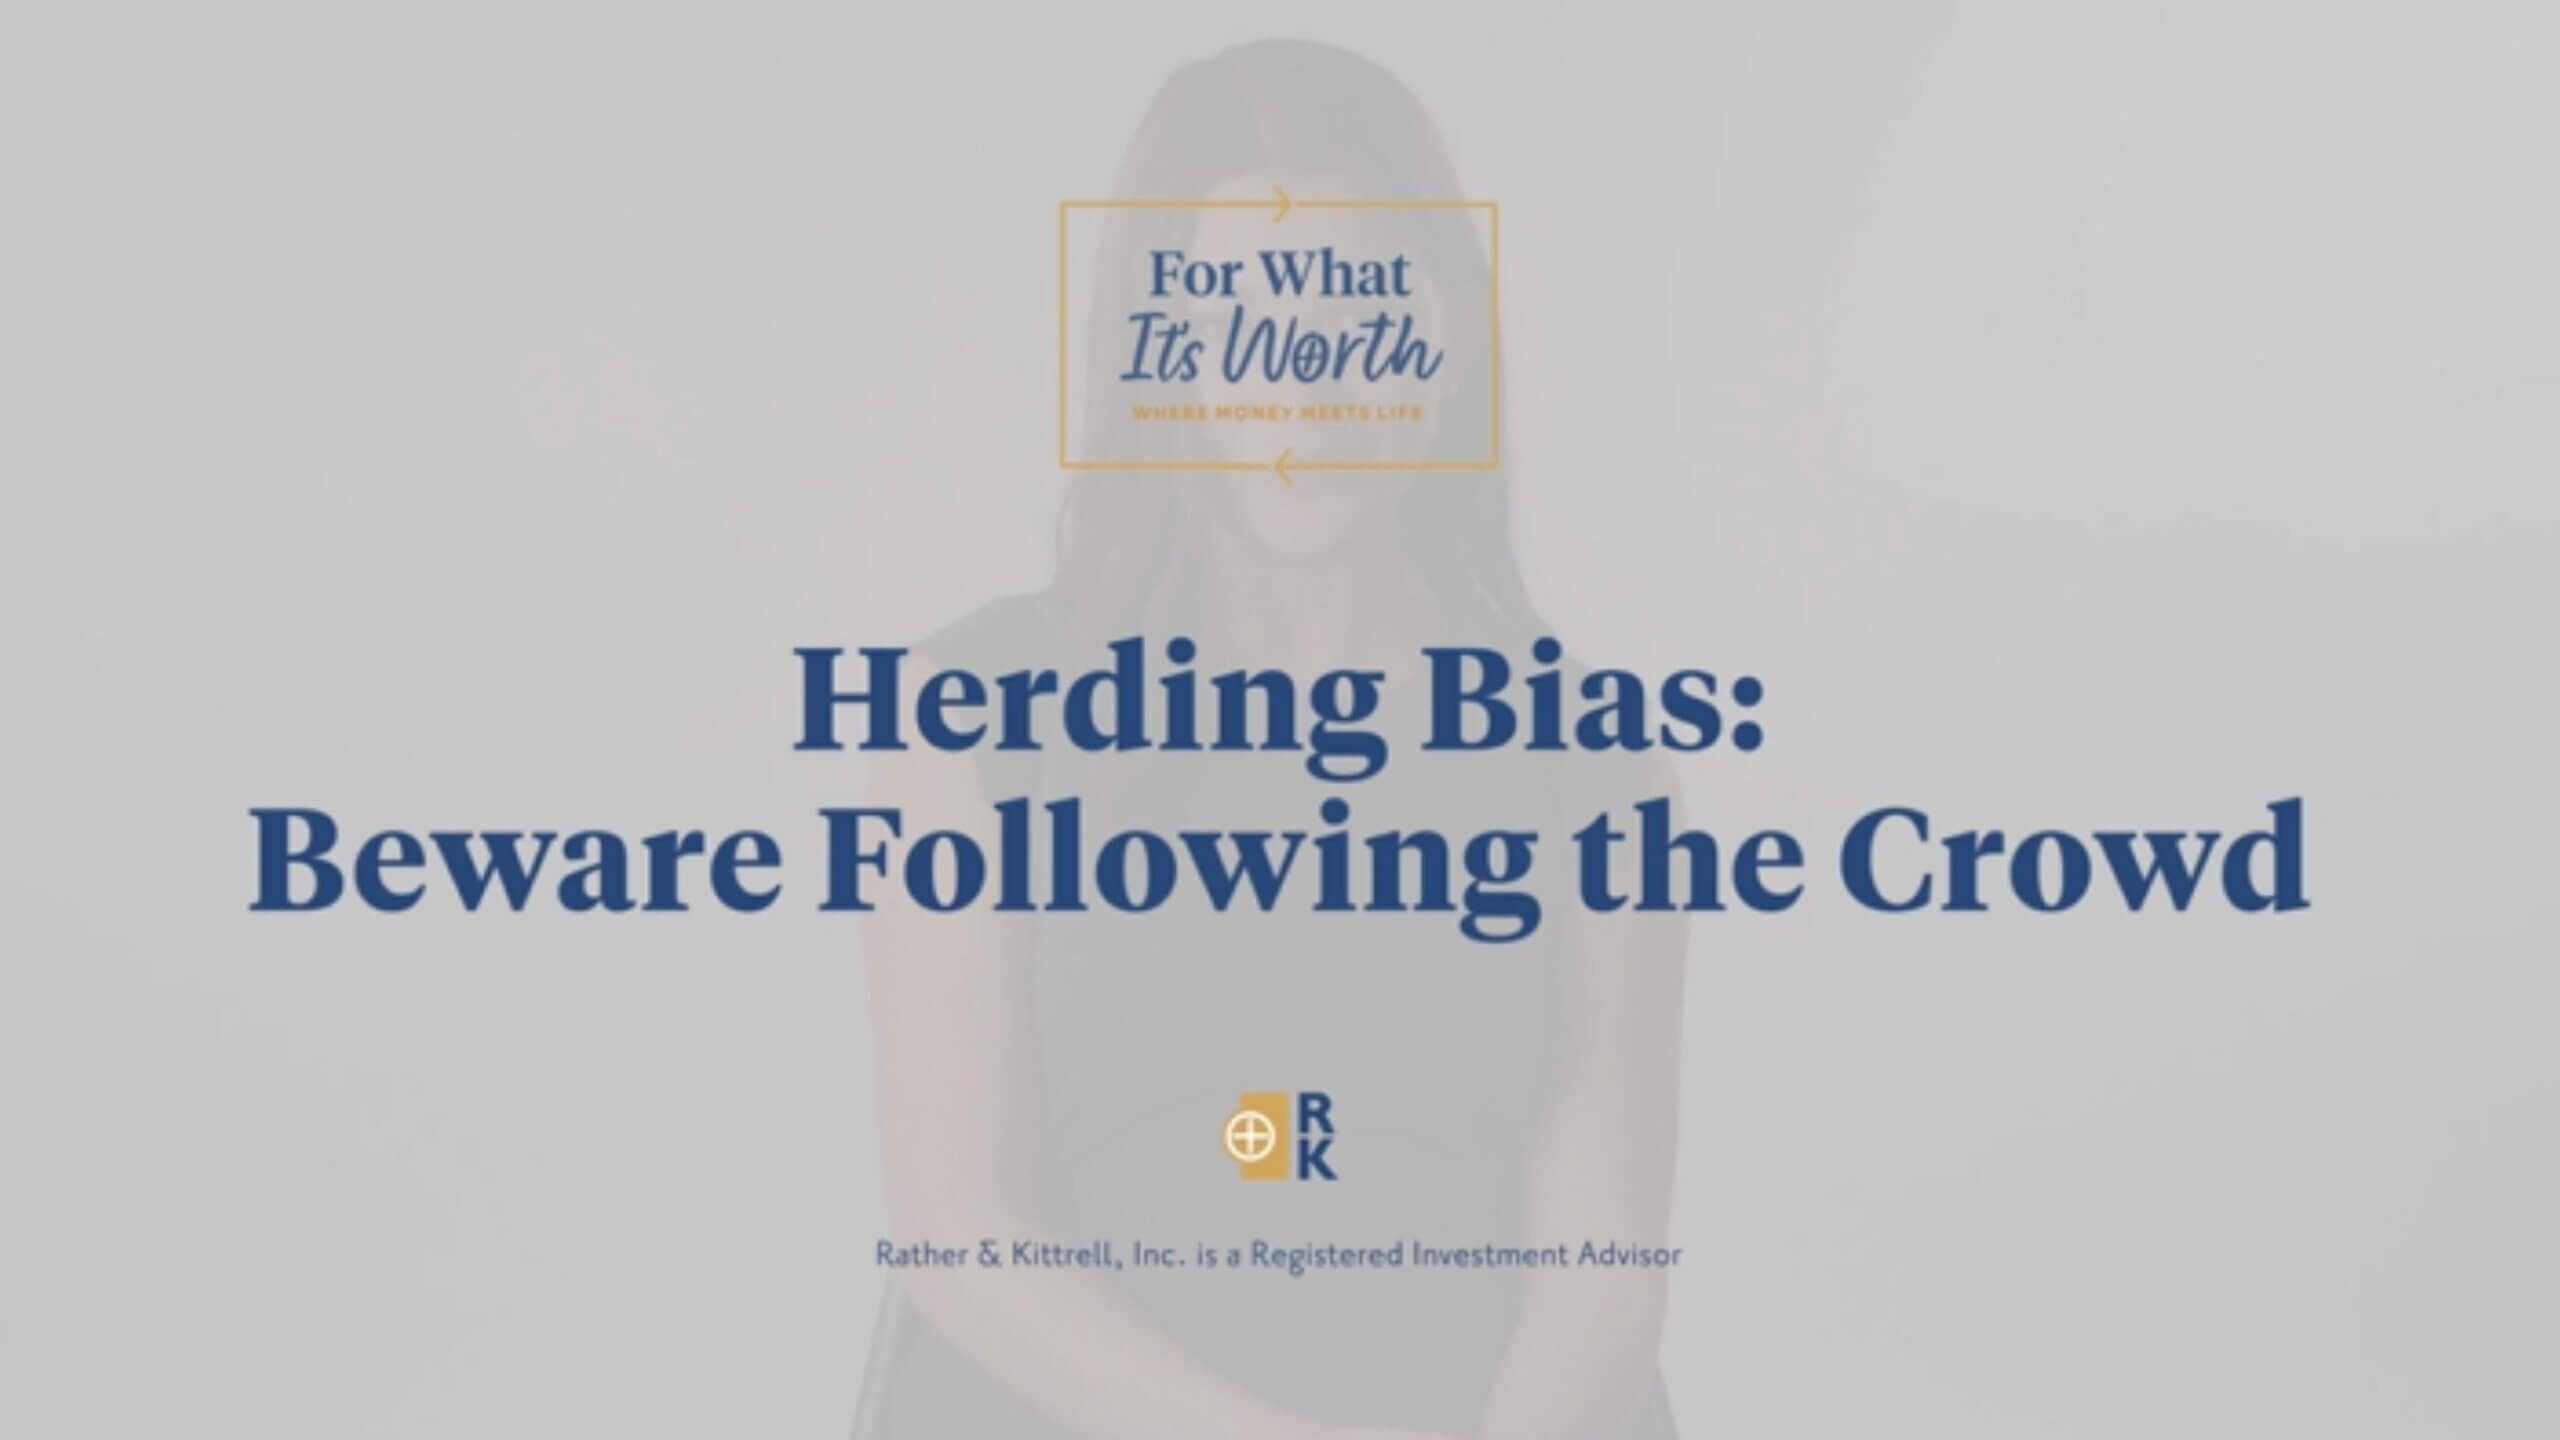 Herding bias: beware following the crowd